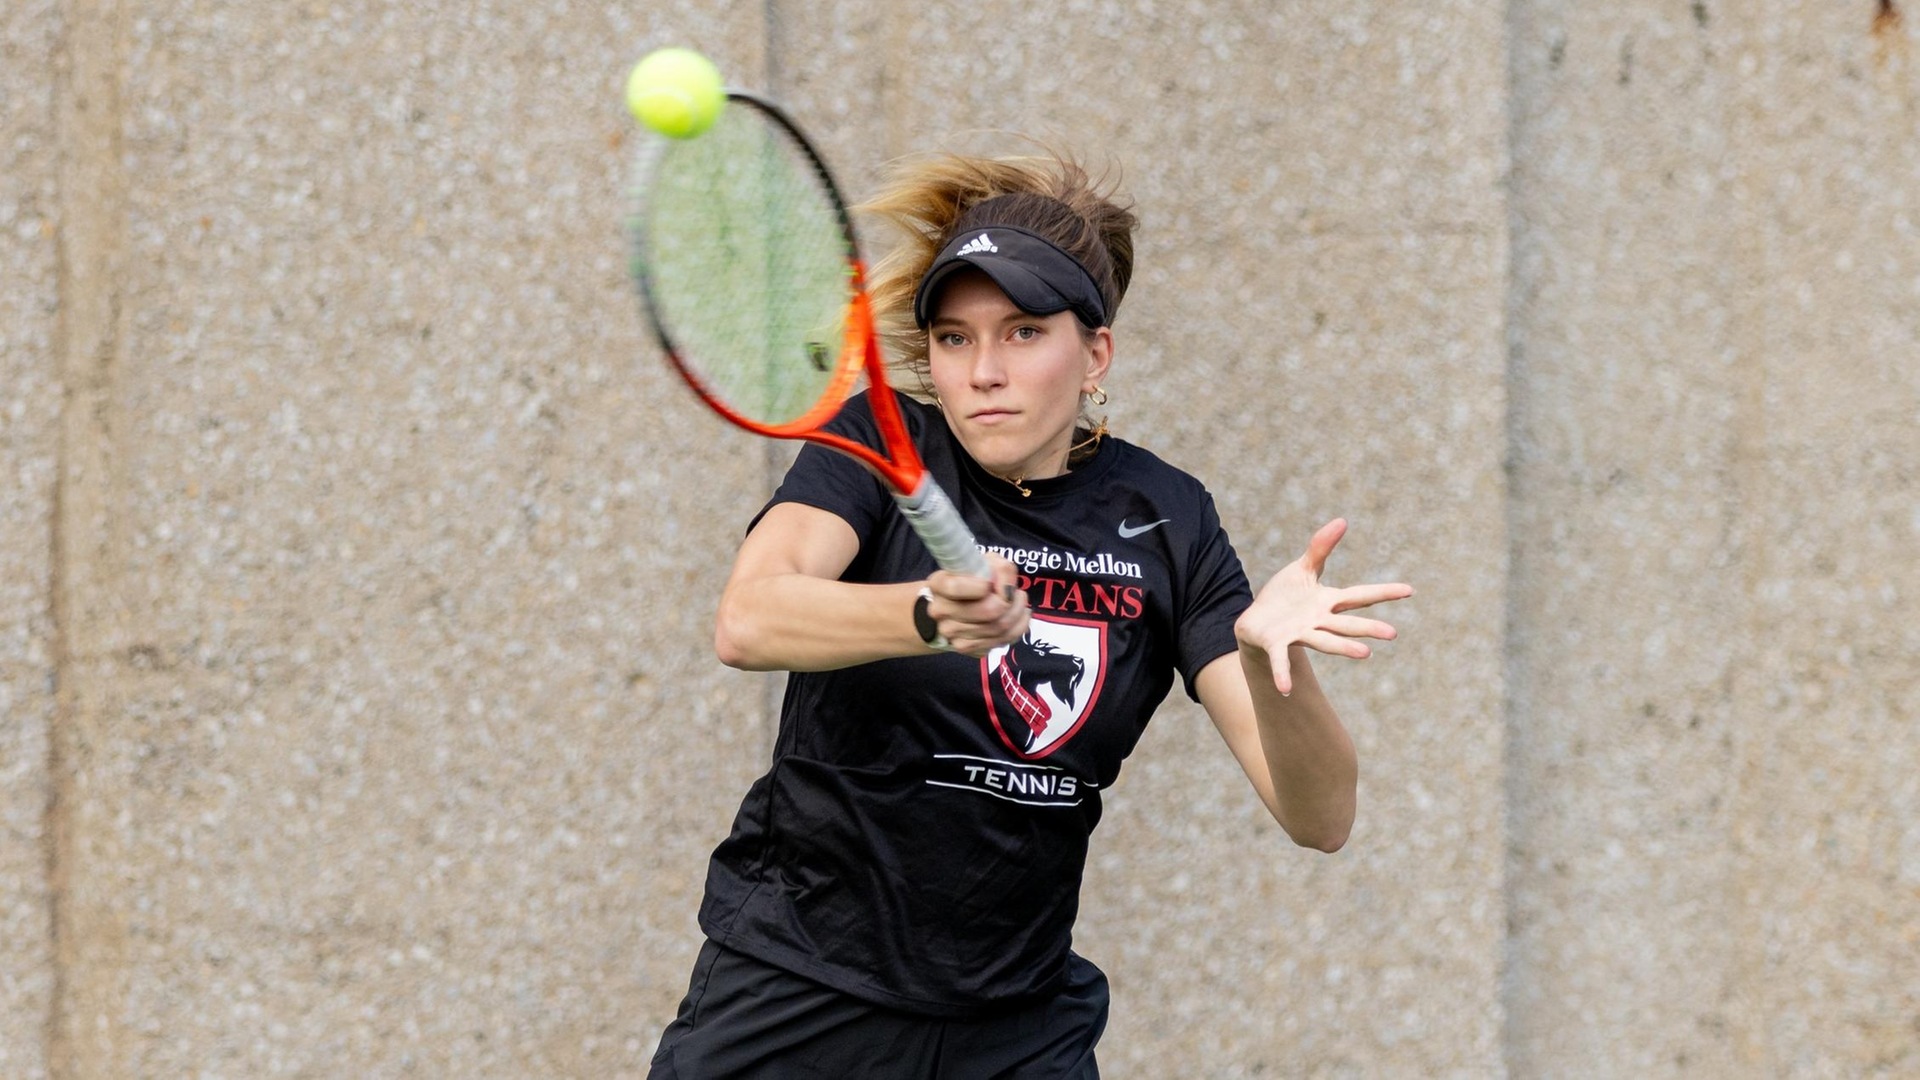 women's tennis player wearing black shirt and black shorts swings racquet at ball